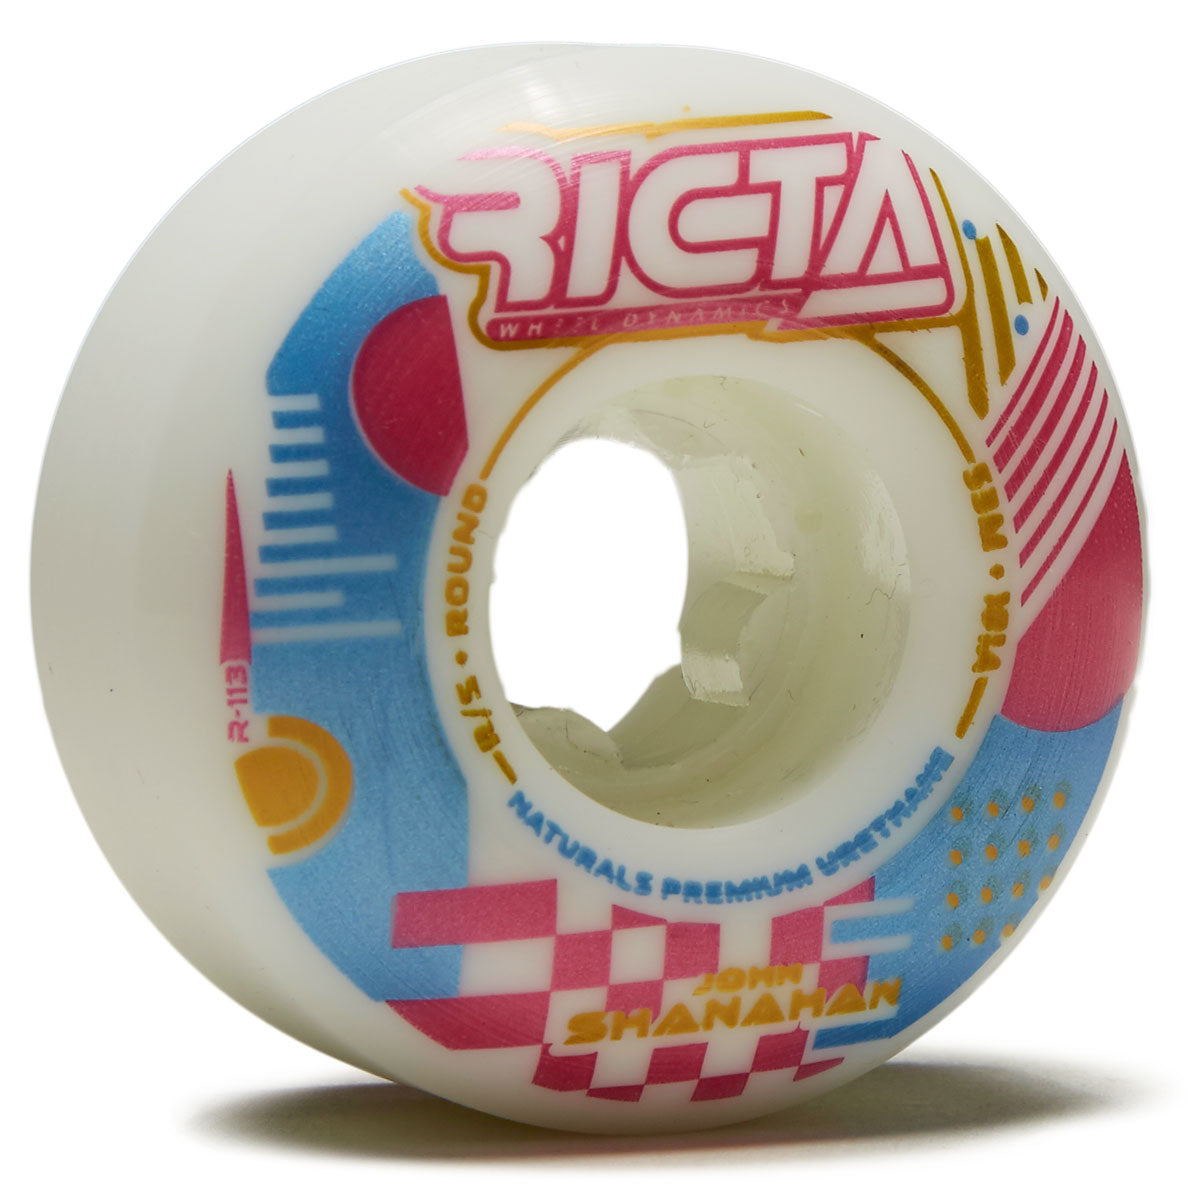 Ricta Shanahan Flux Naturals Round 101a Skateboard Wheels - White - 53mm image 1